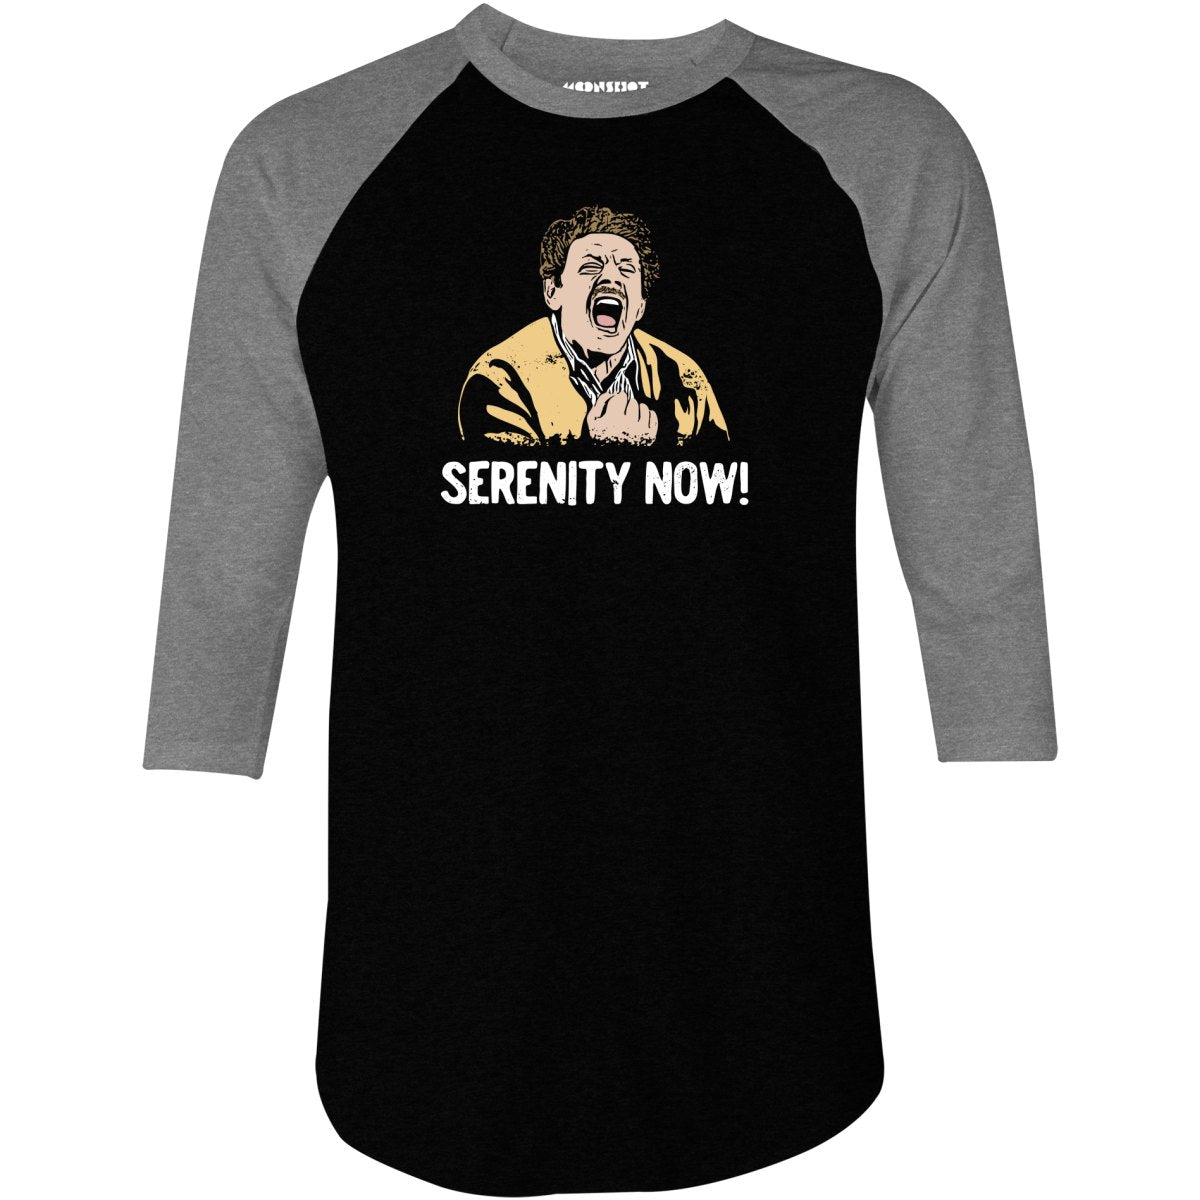 Serenity Now! - 3/4 Sleeve Raglan T-Shirt